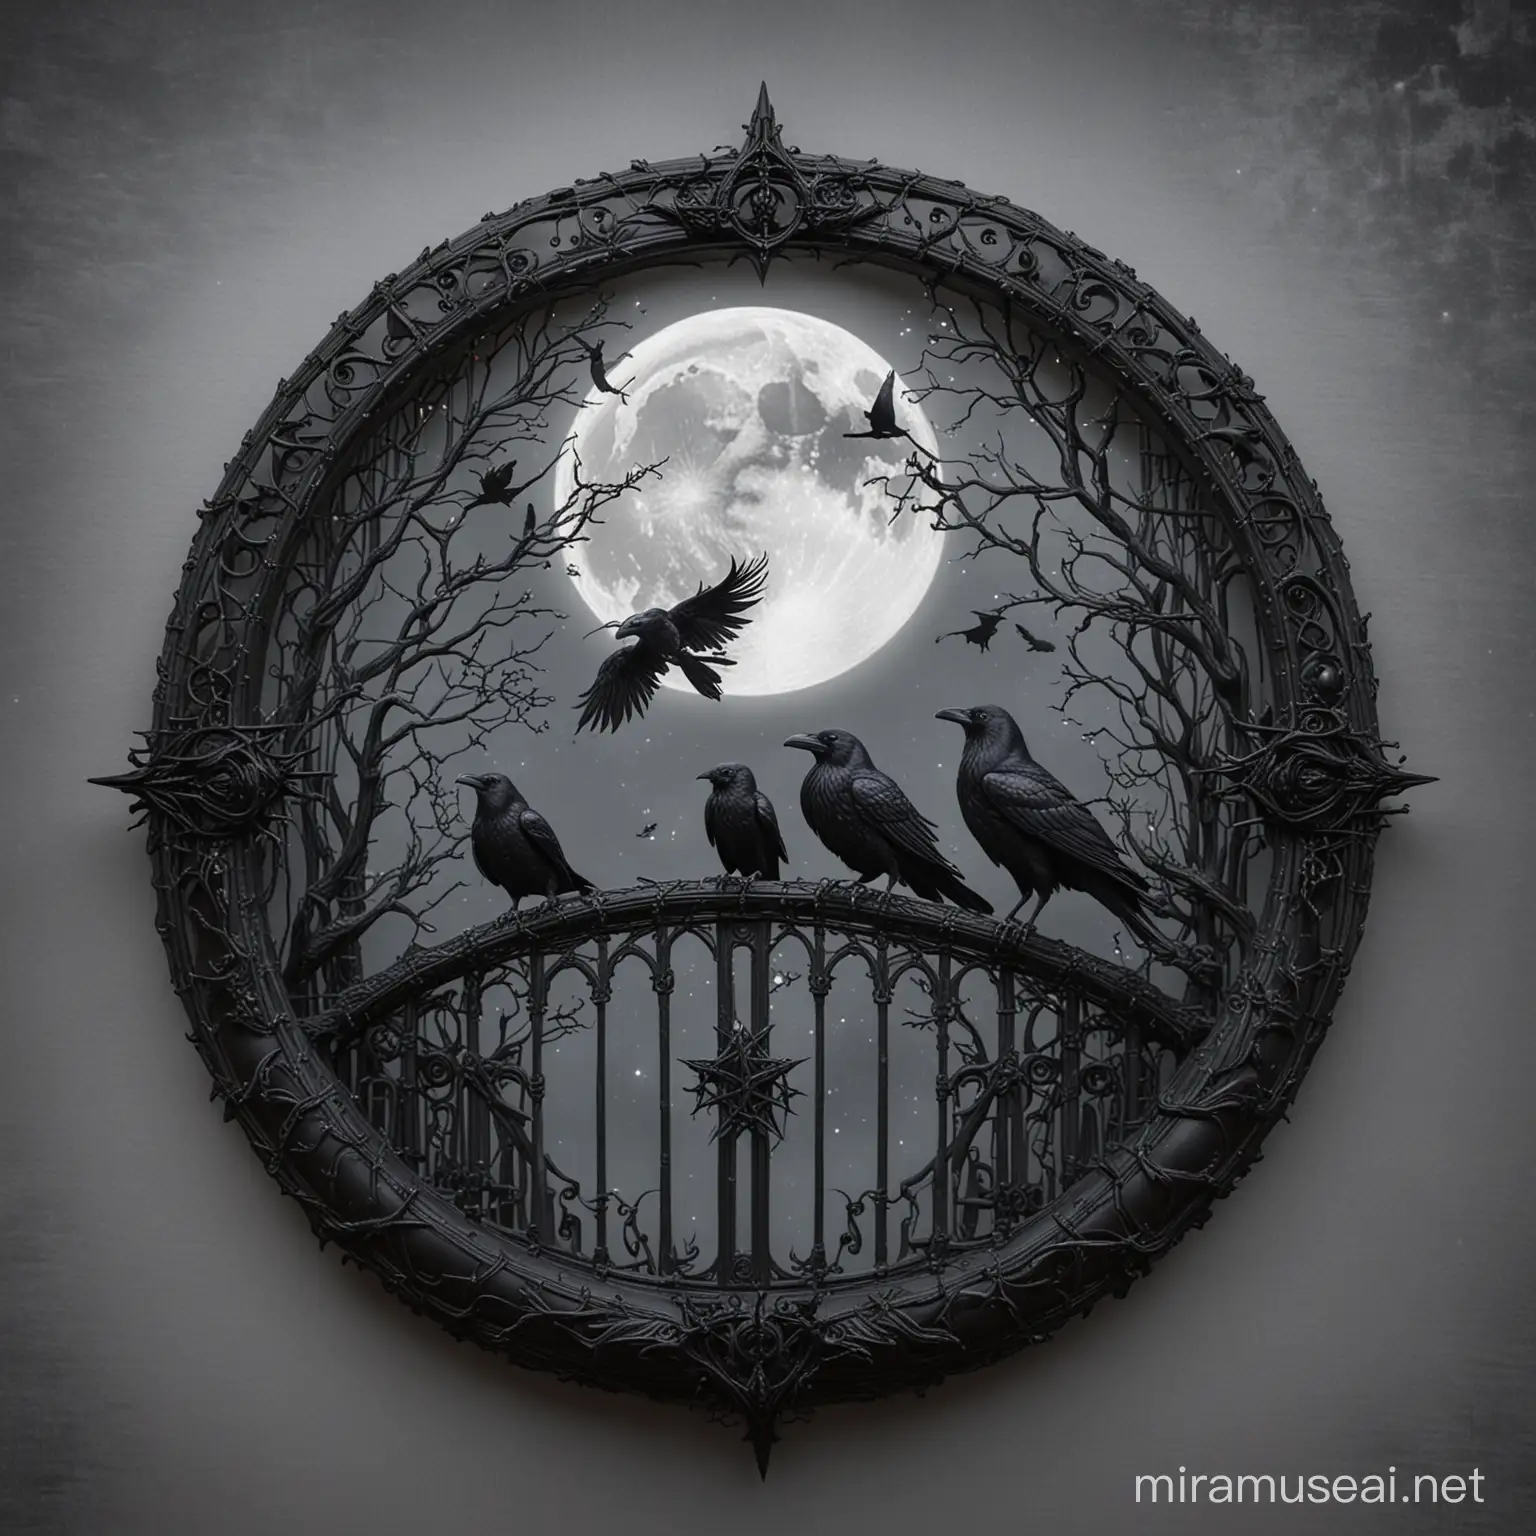 Gothic stars moon gate raven

